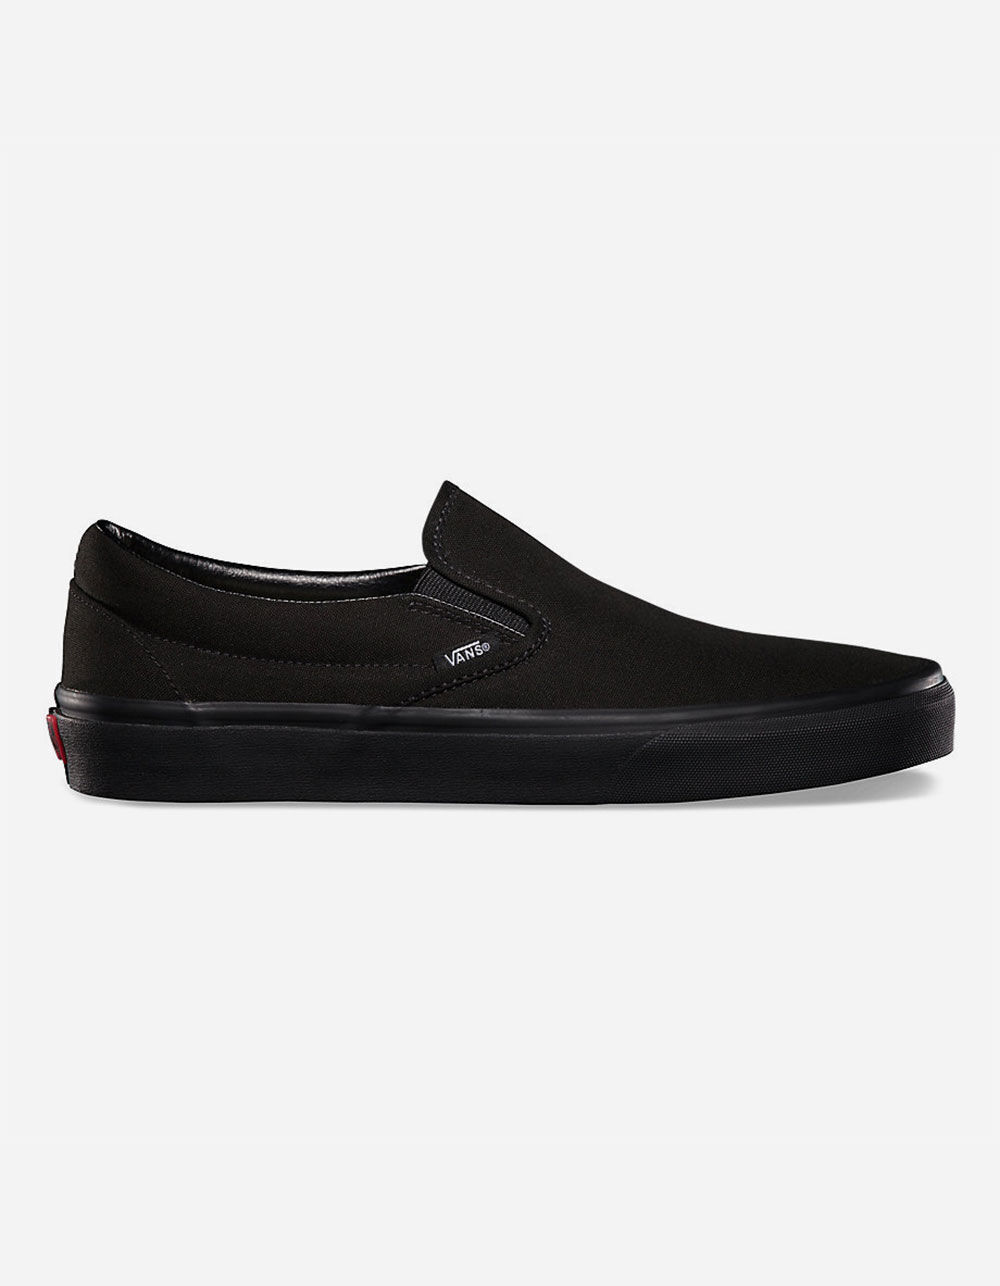 VANS Classic Slip-On Black & Black Shoes - BLKBL - 281024178 عطر من درعه